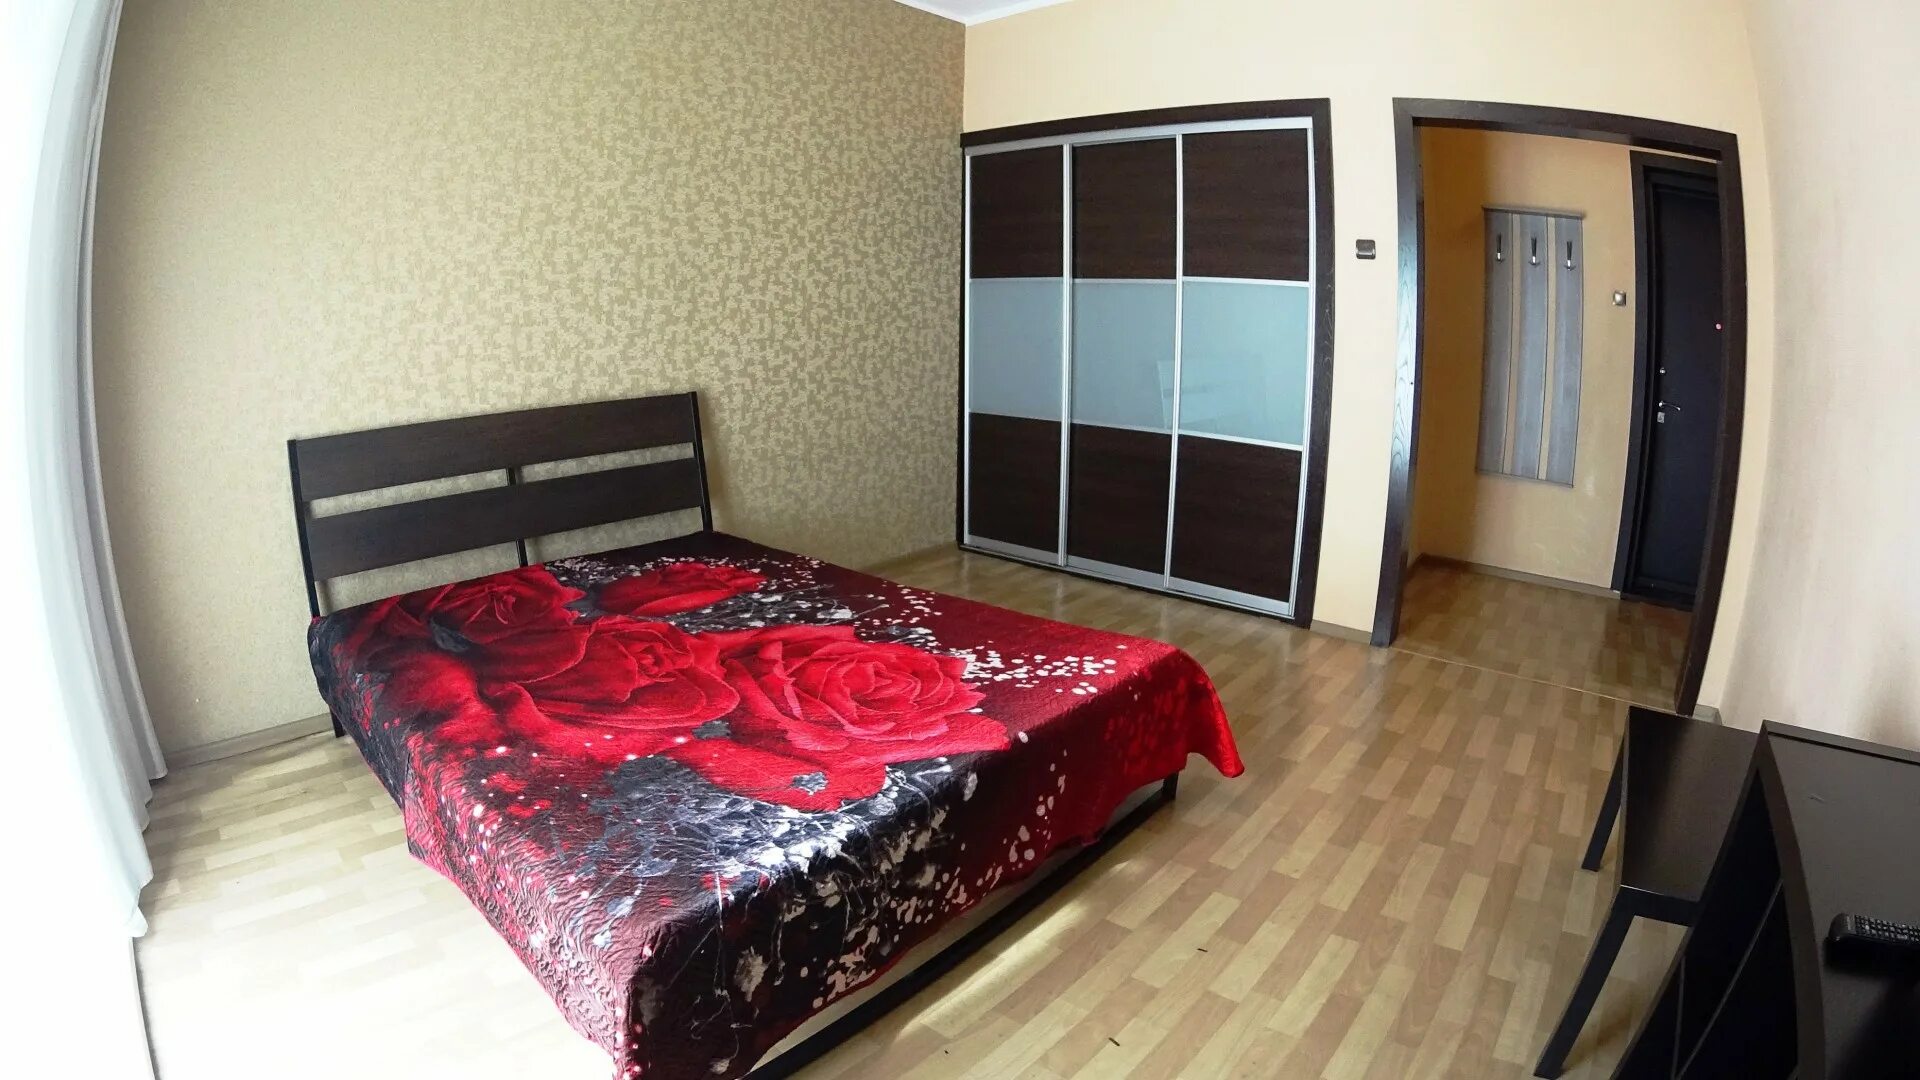 Квартира. Ленина 1 гостиница Новосибирск. Апартаменты на Ленина Новосибирск. Посуточные квартиры в Новосибирске.